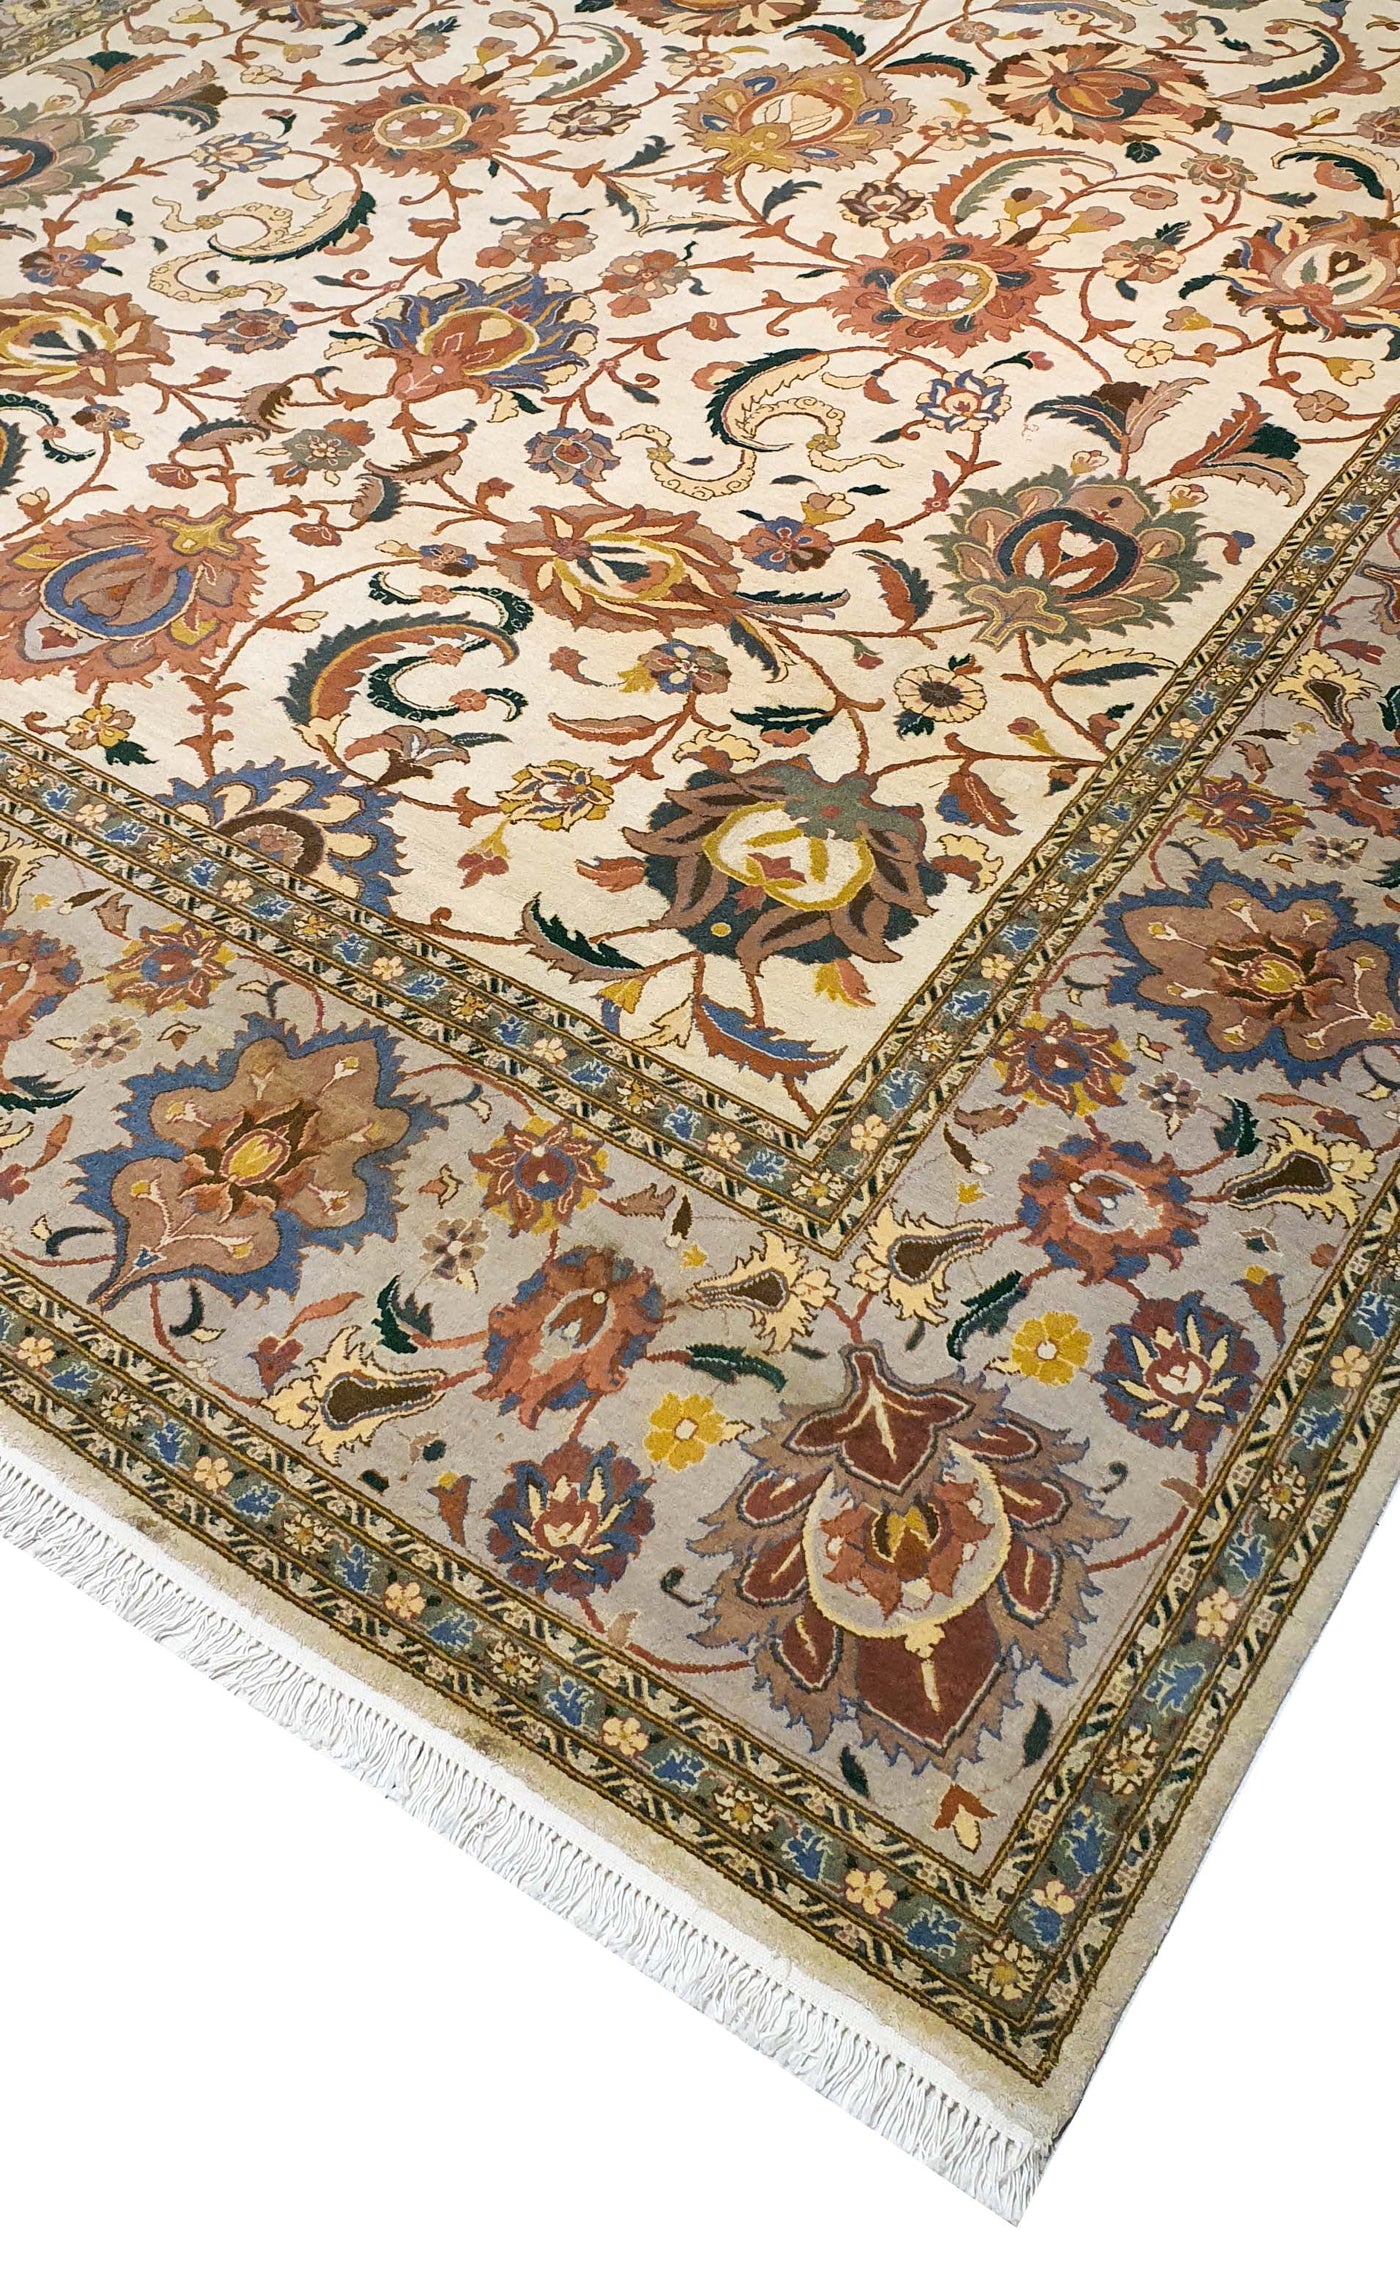 Pak Persian Isfahan Floral Design Silk Base - AR0281